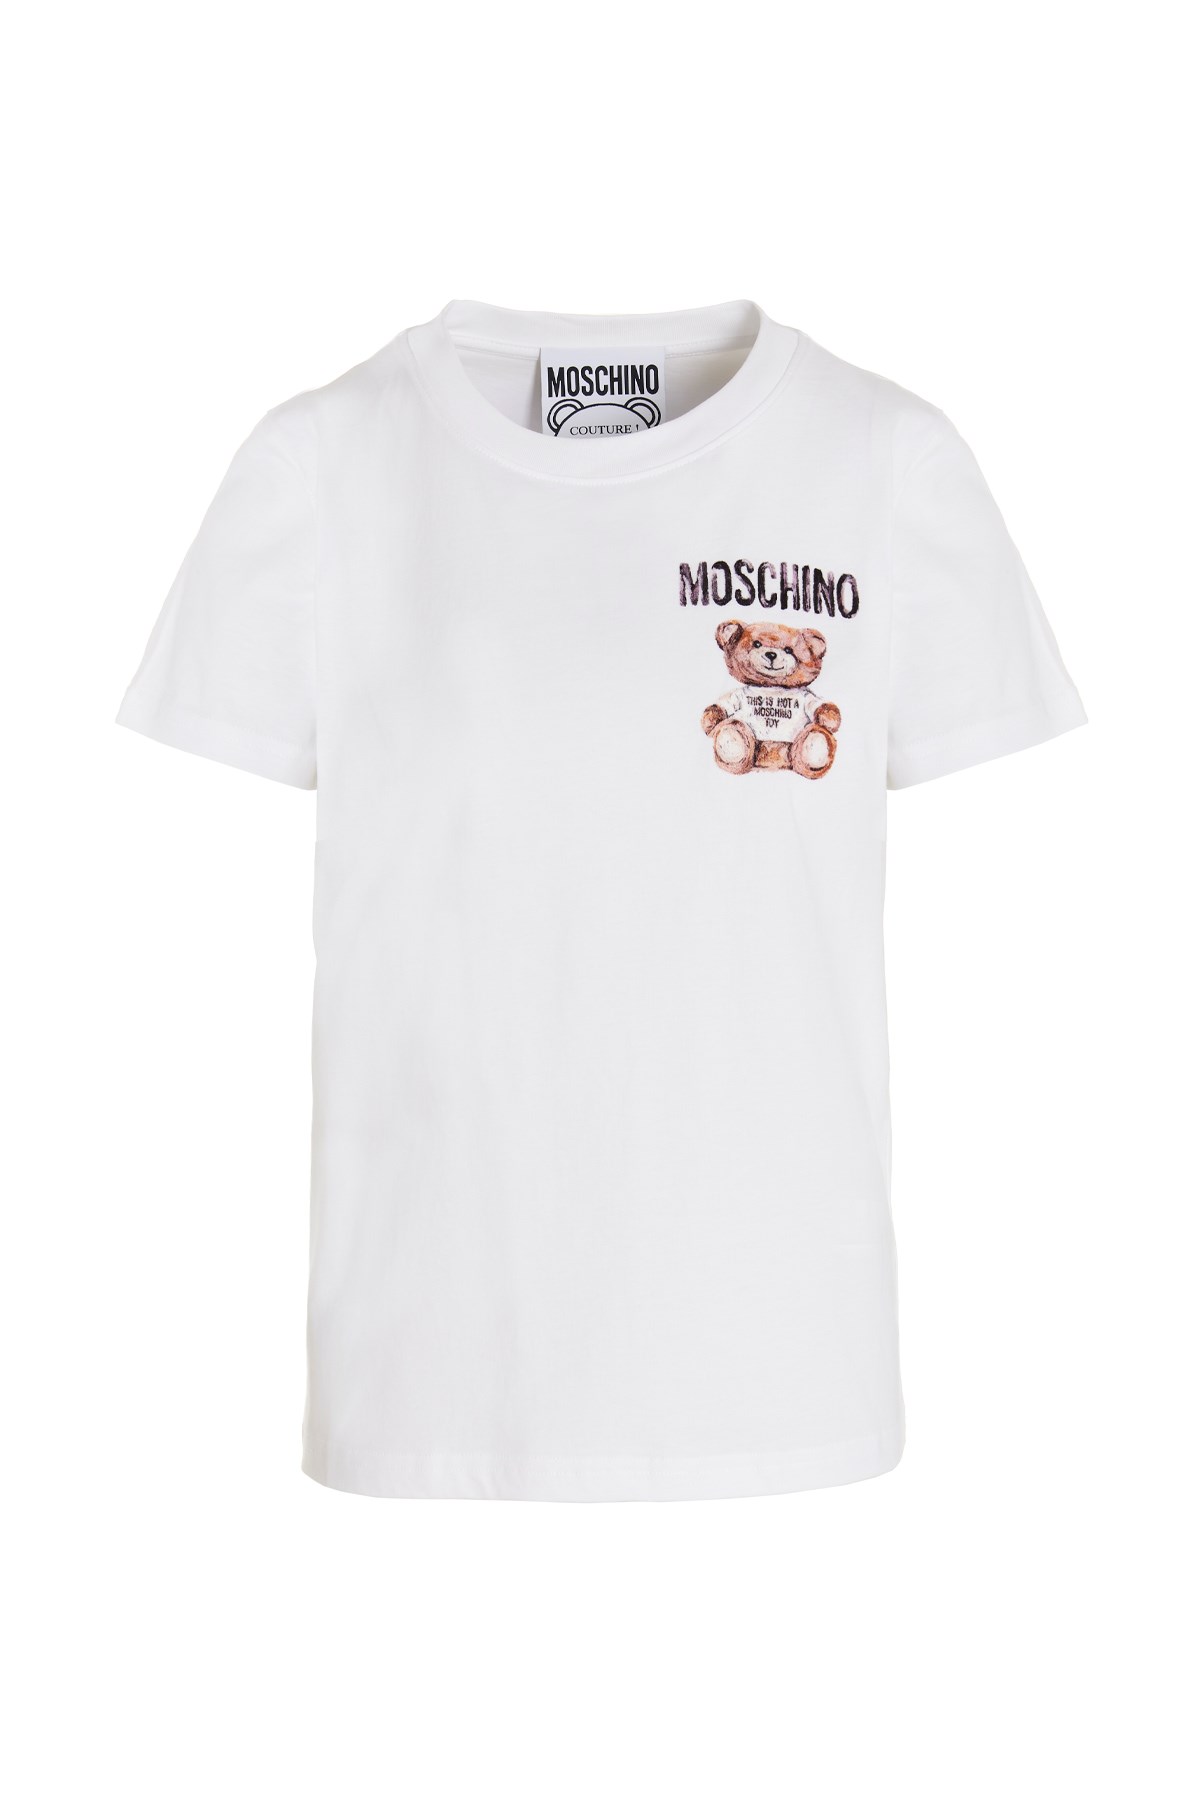 MOSCHINO T-Shirt Mit Geflocktem Teddy-Logo